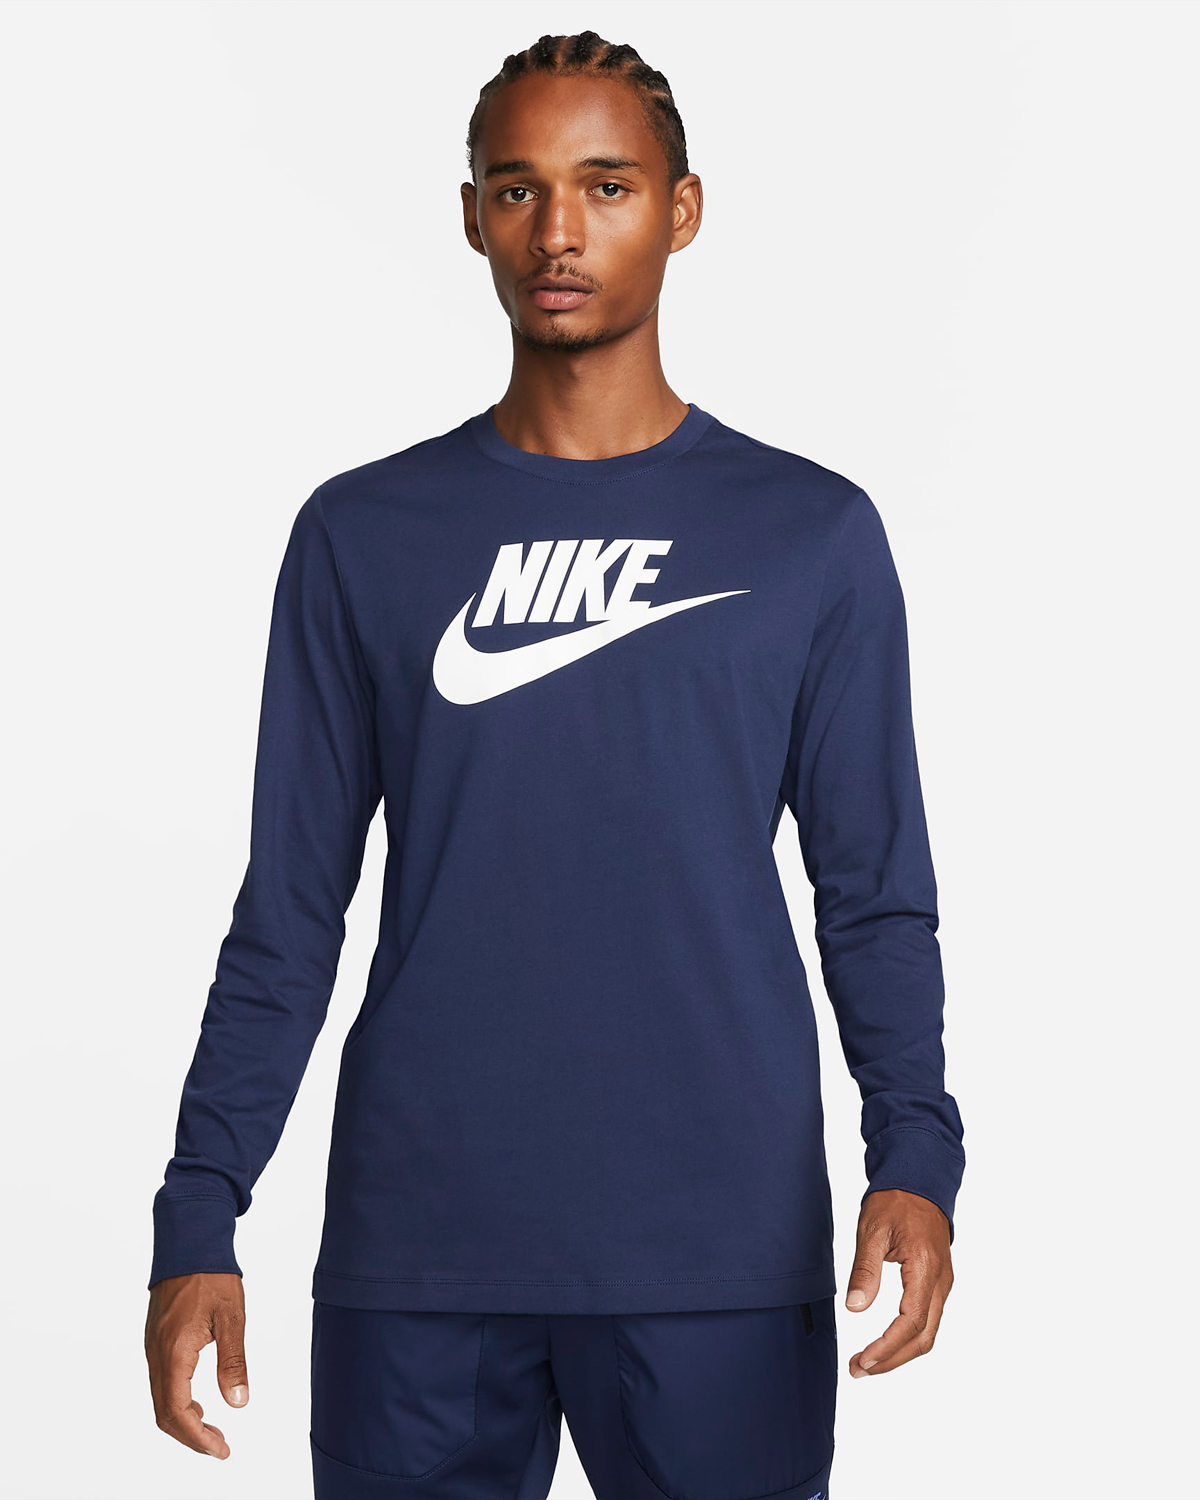 Nike-Long-Sleeve-T-Shirt-Midnigt-Navy